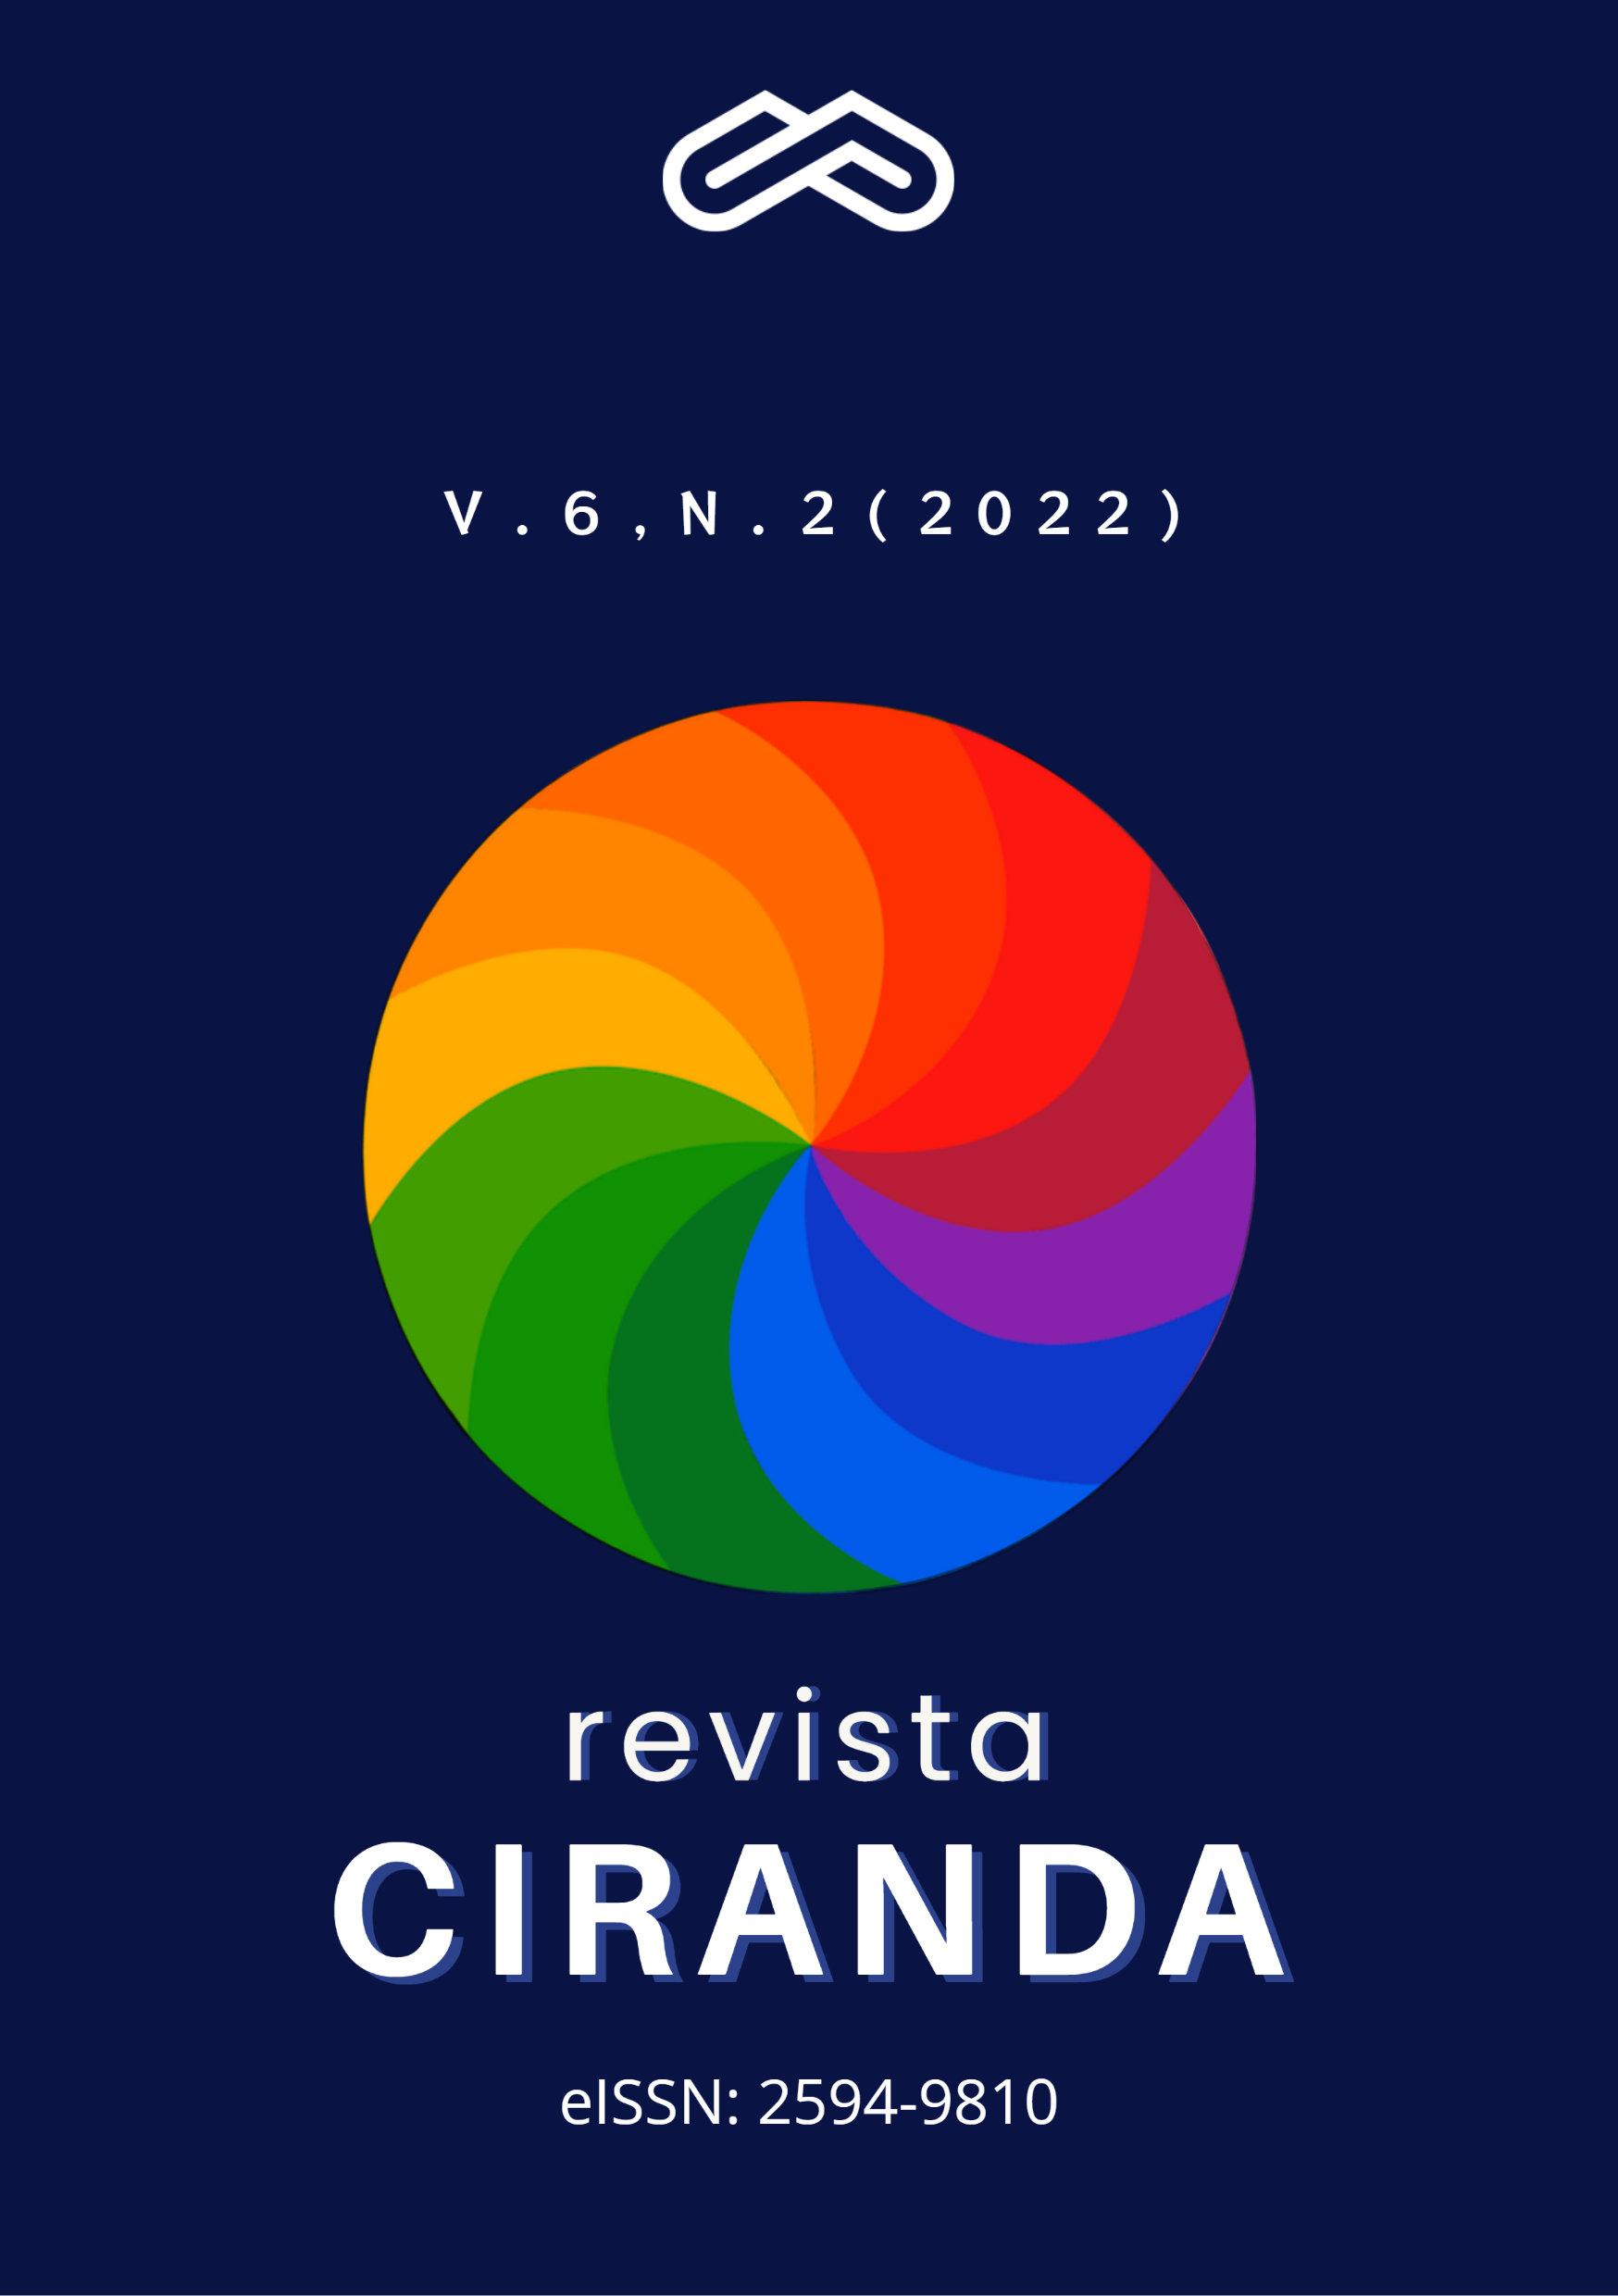 					Visualizar v. 6 n. 02 (2022): REVISTA CIRANDA
				